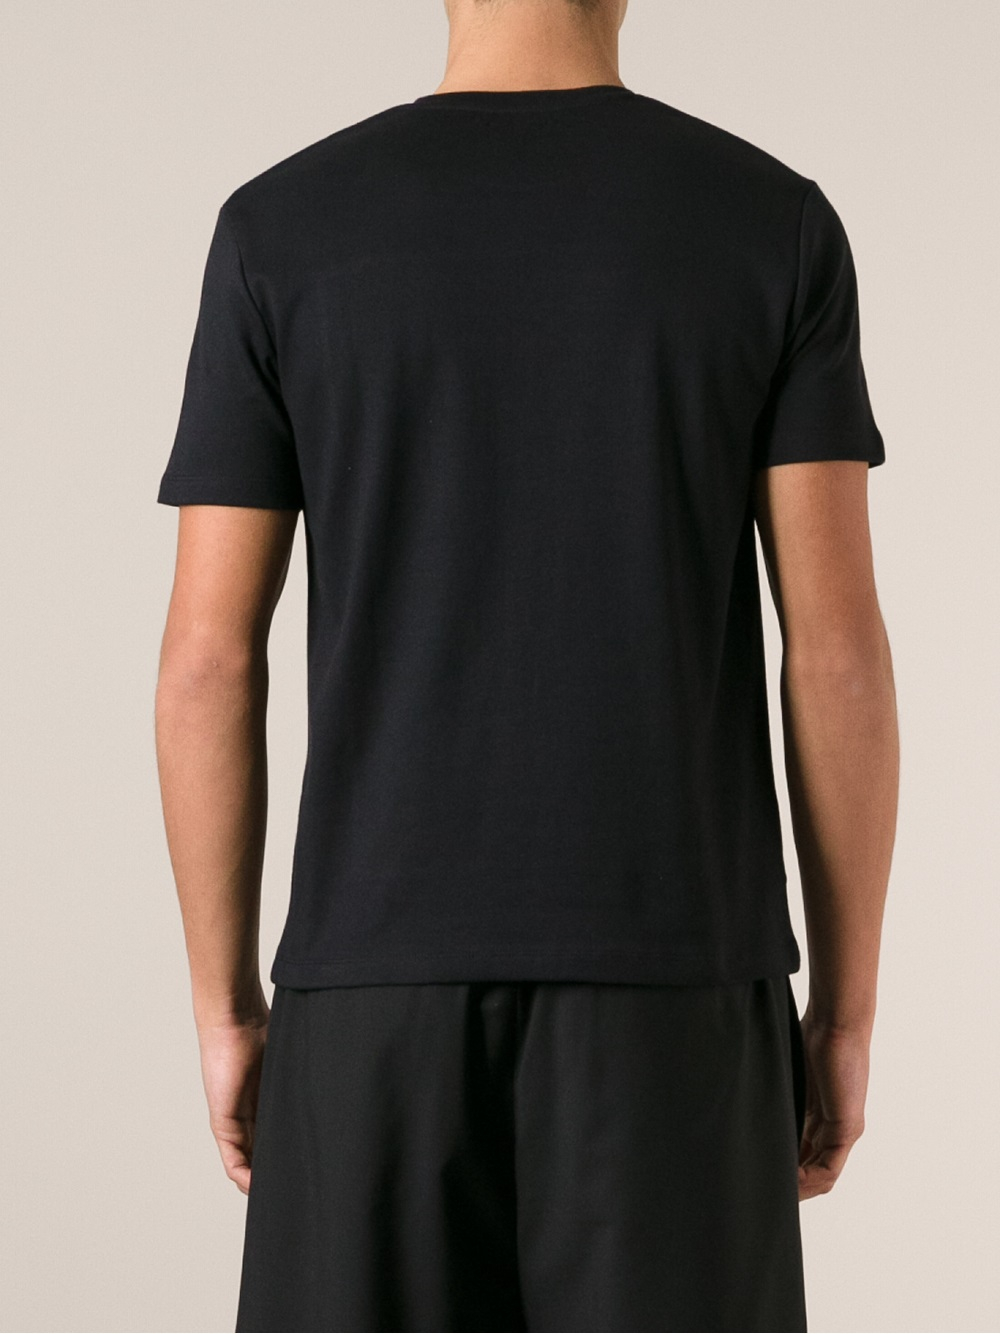 Lyst - Raf Simons Printed Tshirt in Black for Men